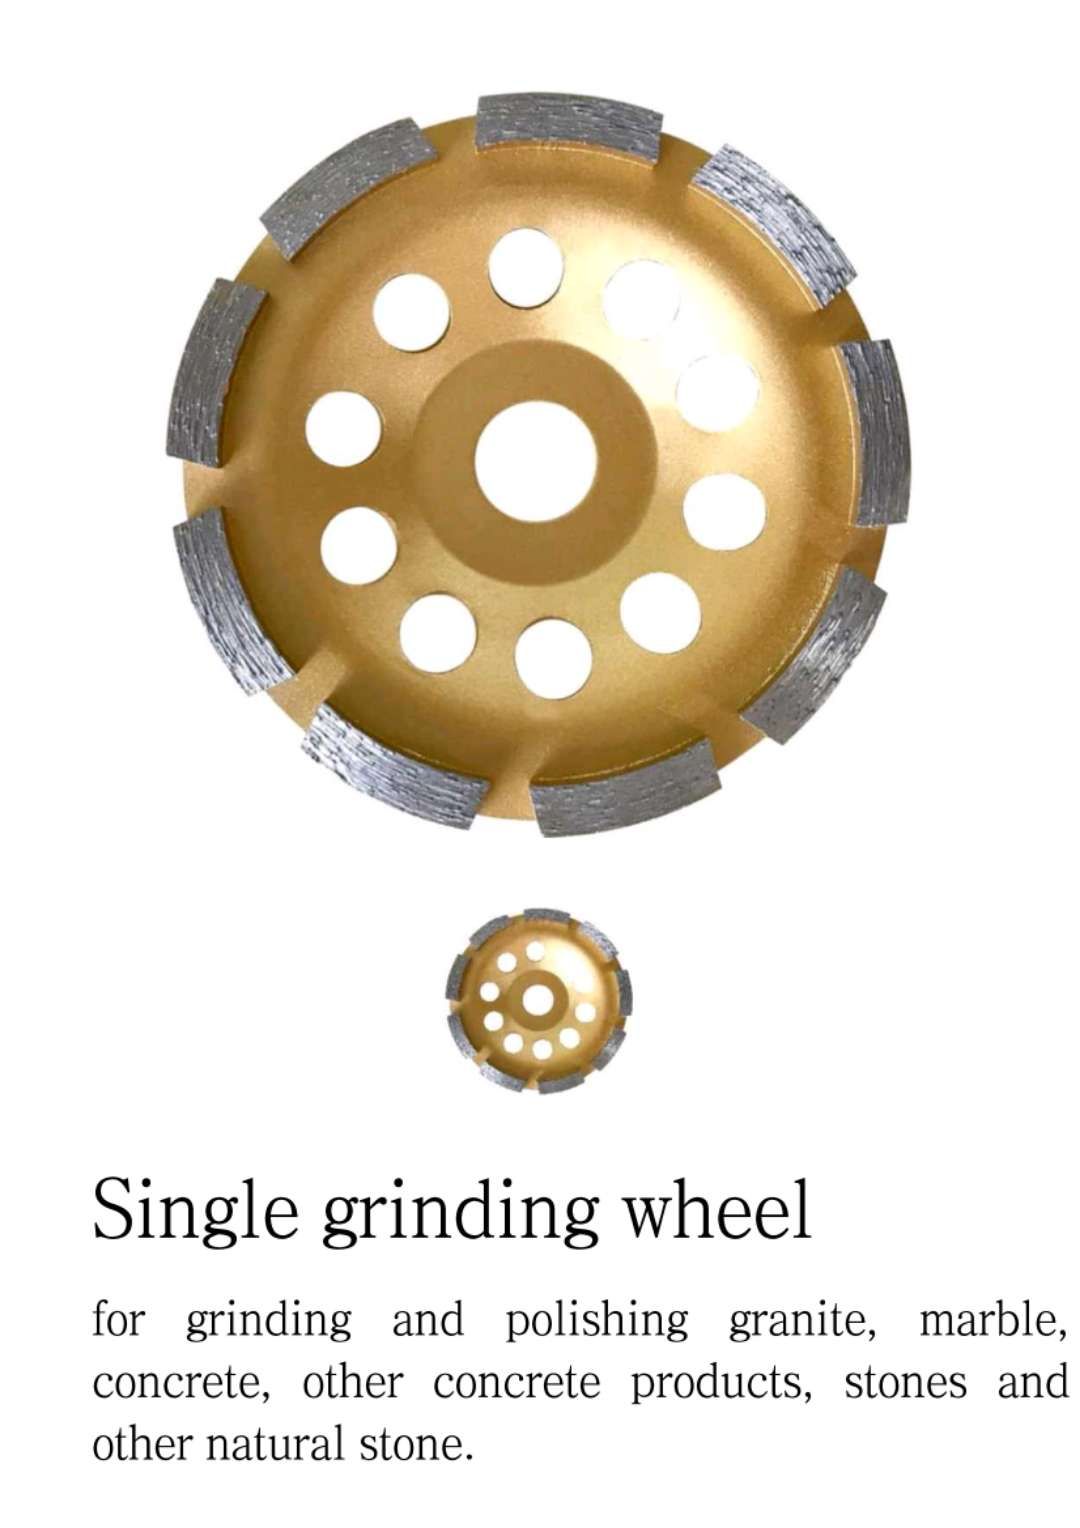 Single grinding wheel